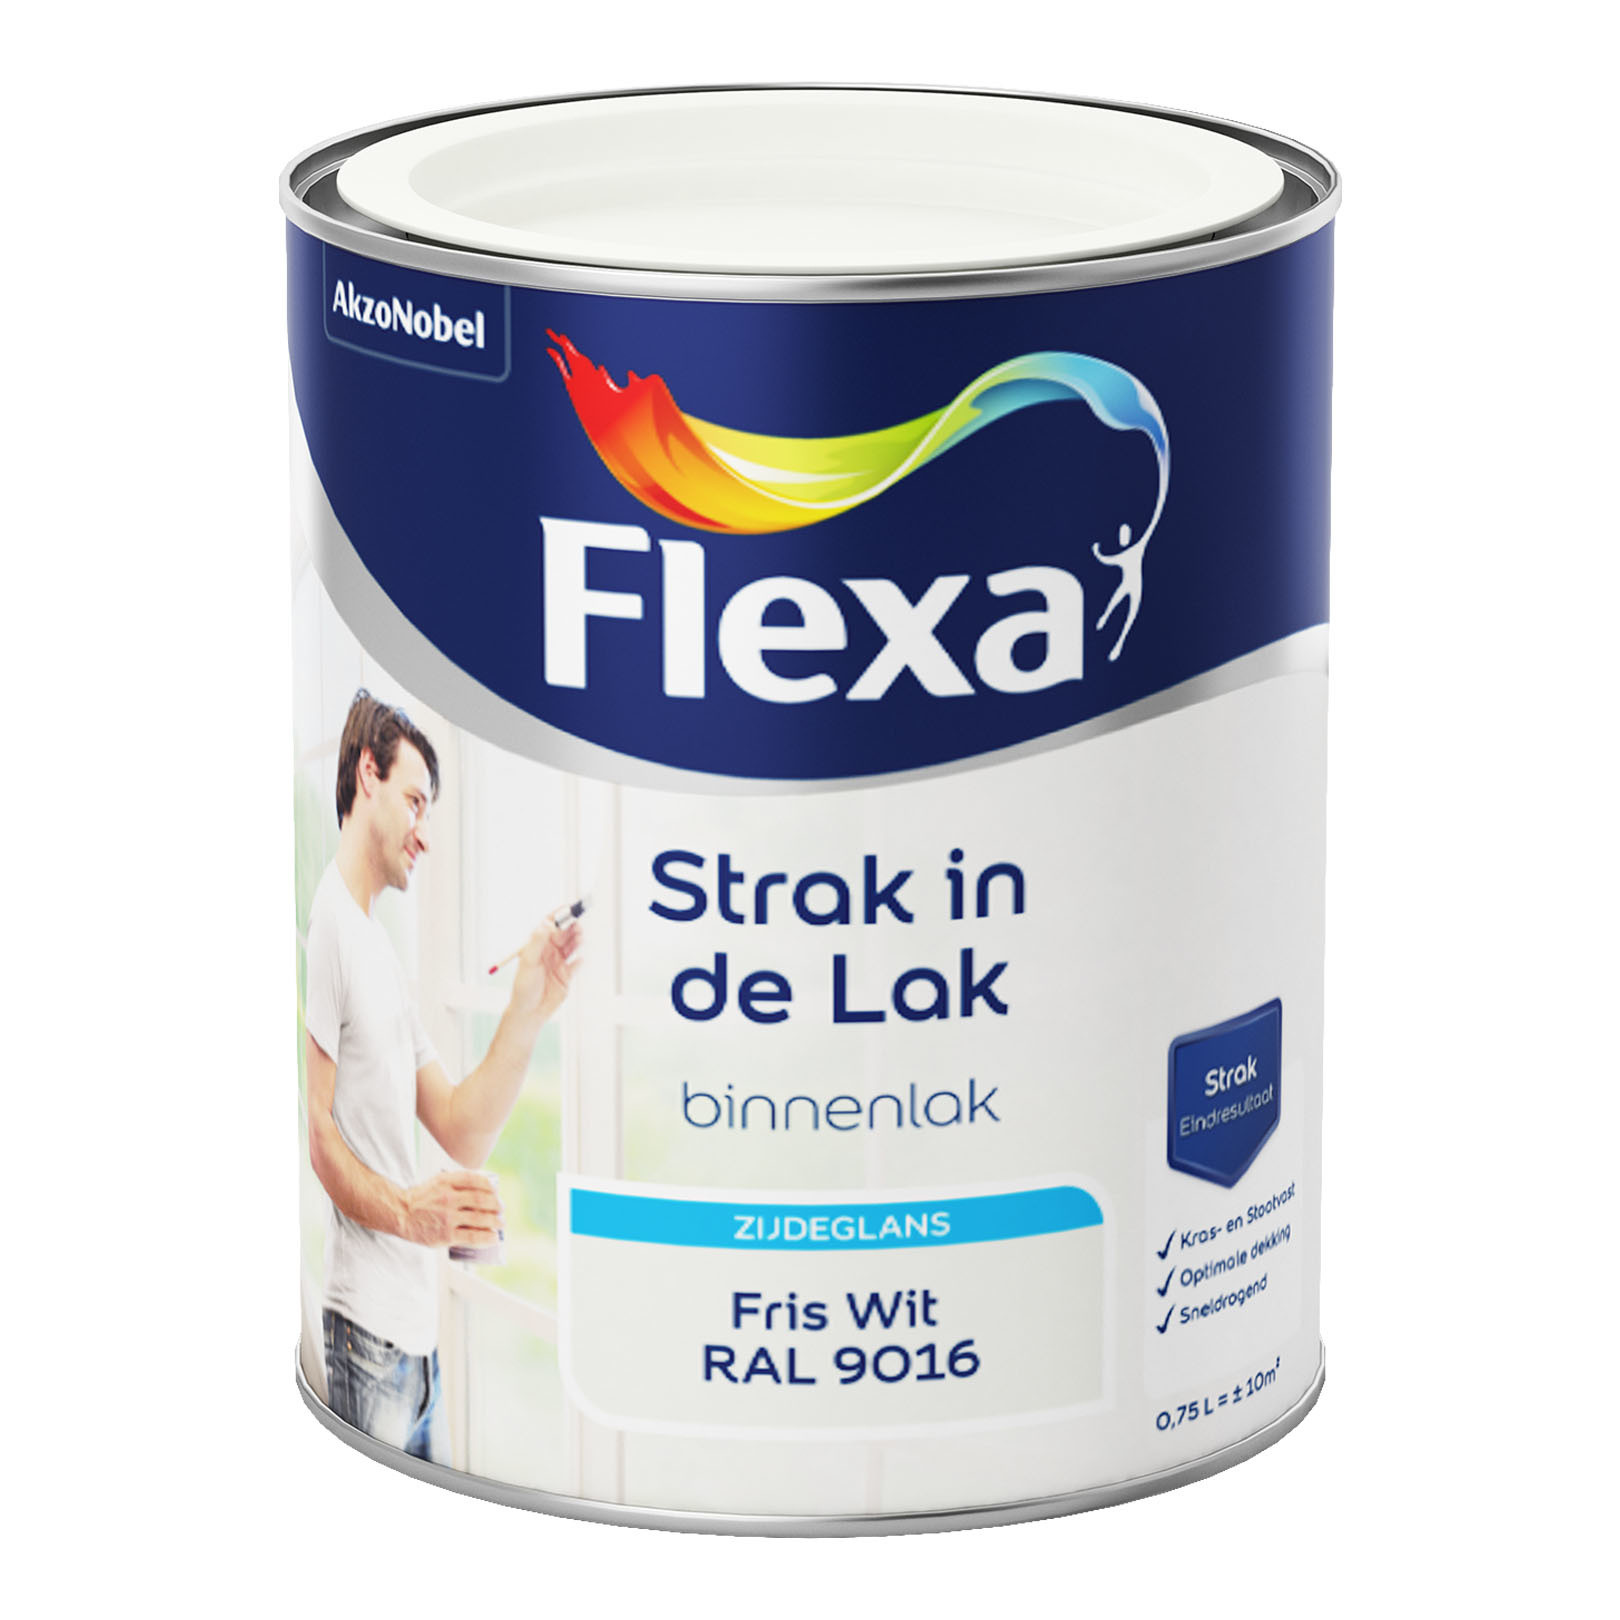 Flexa Strak in de Lak Binnenlak Zijdeglans - Fris Wit - RAL 9016